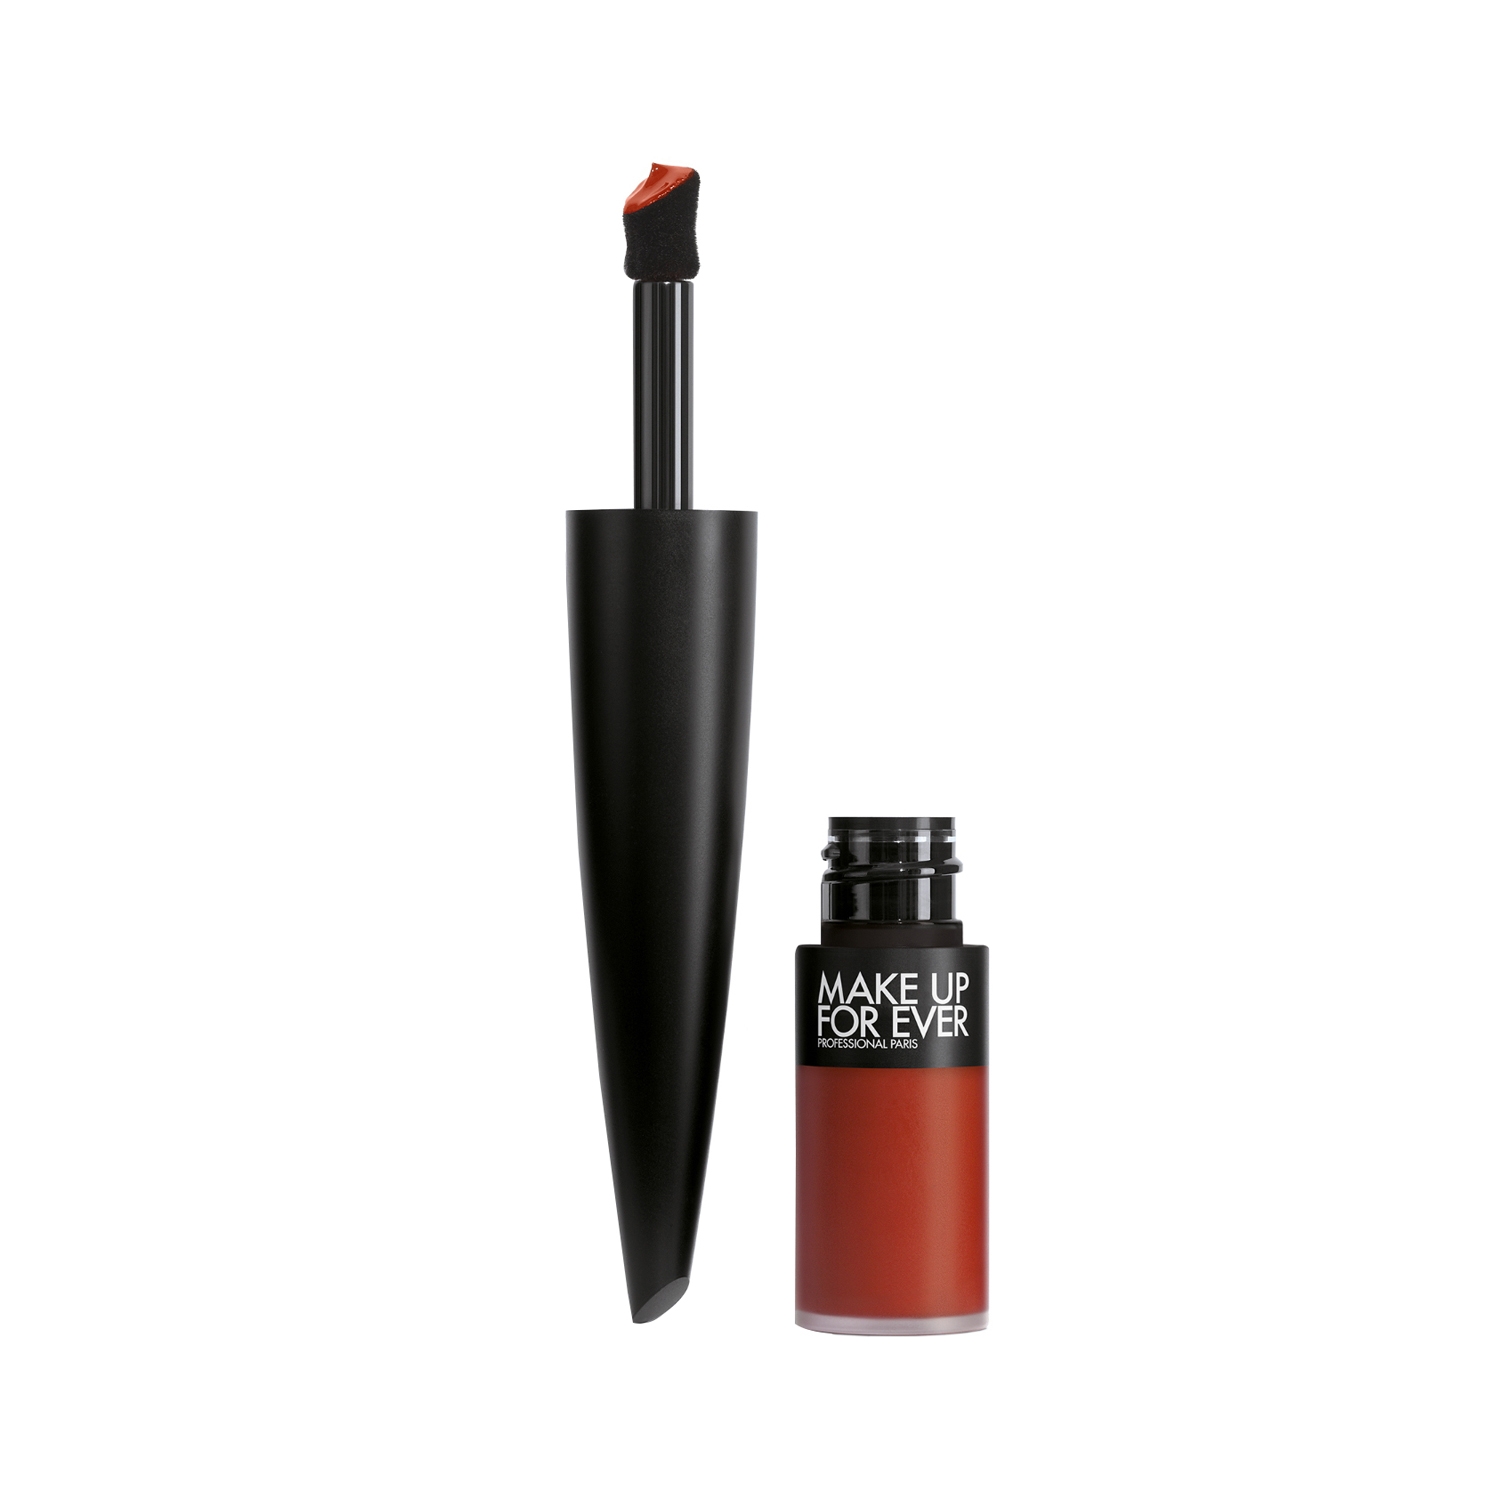 Make Up For Ever | Make Up For Ever Rouge Artist for Ever Matte Liquid Lipstick- Infinite Sunset 342 (4.5ml)